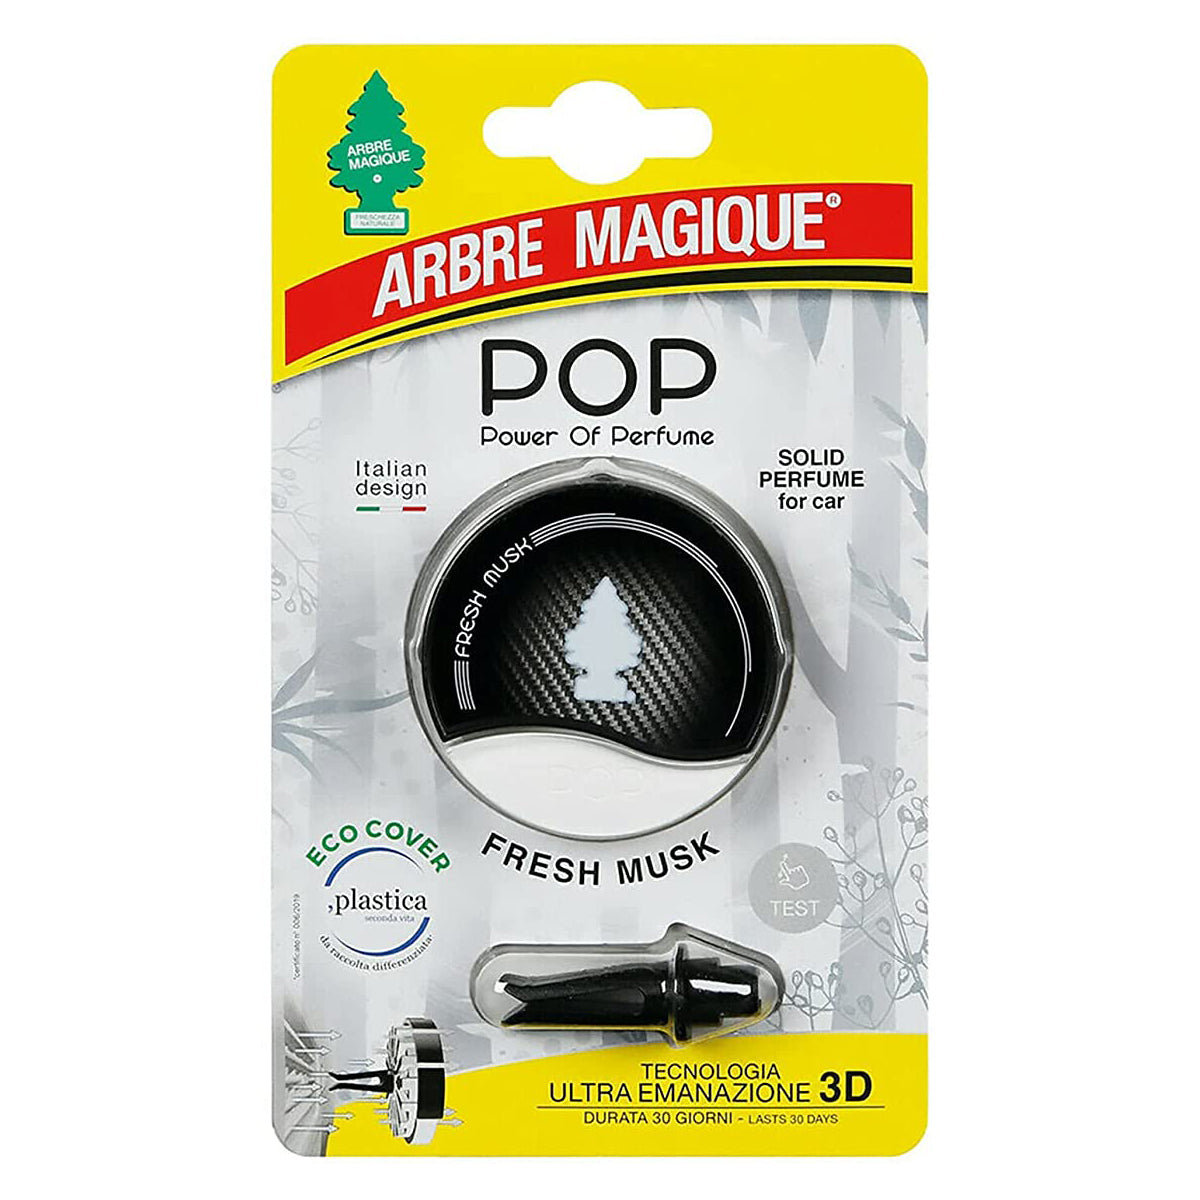 Arbre Magique Pop Deodorante per Auto Fresh Musk – APNEUS